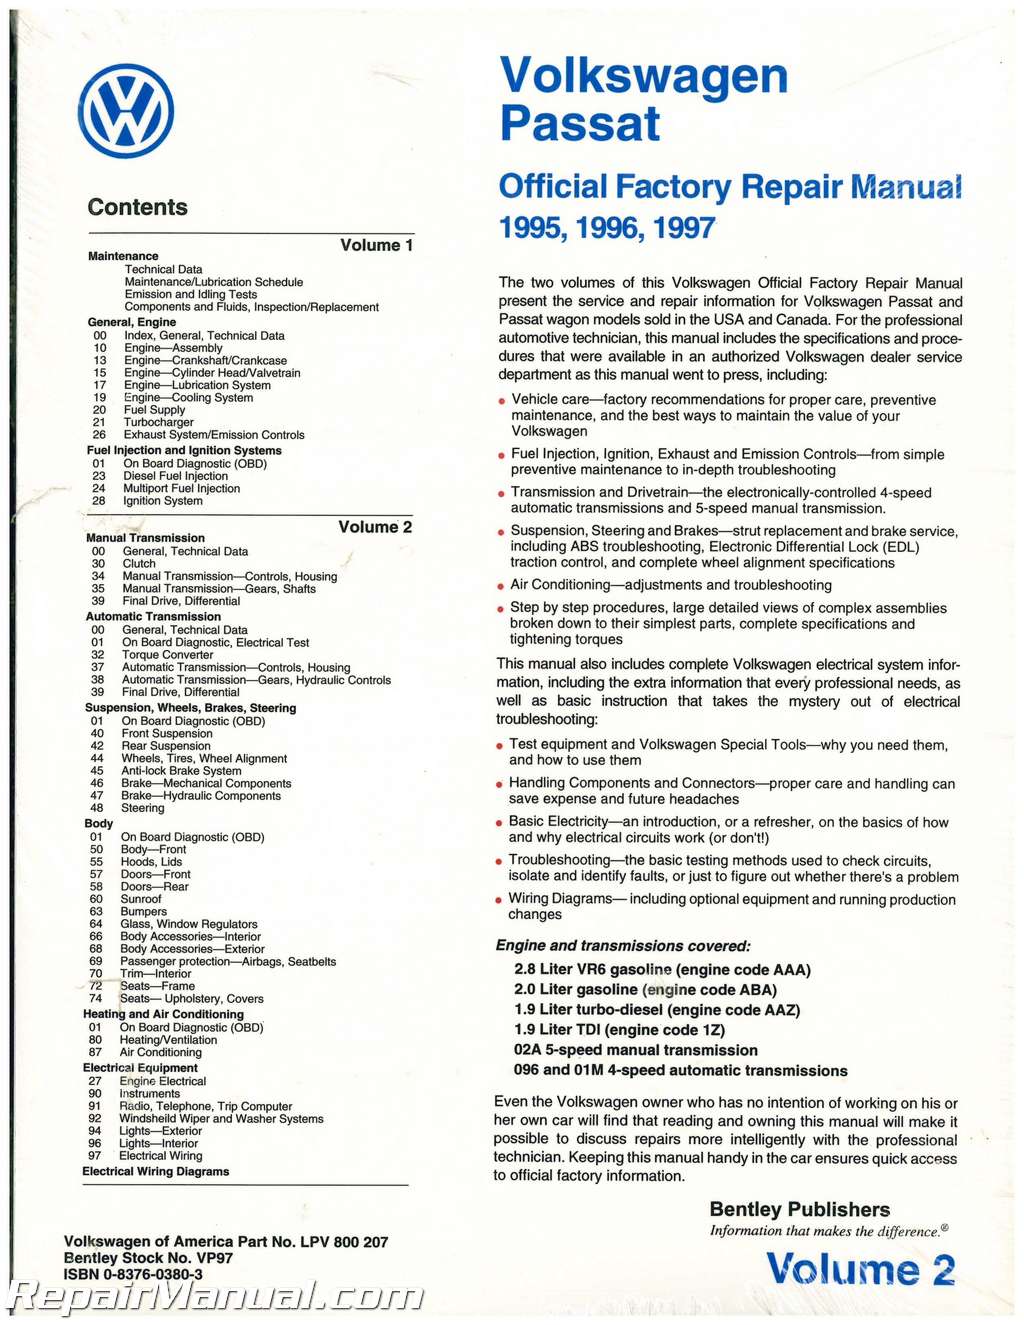 Volkswagen passat repair manual